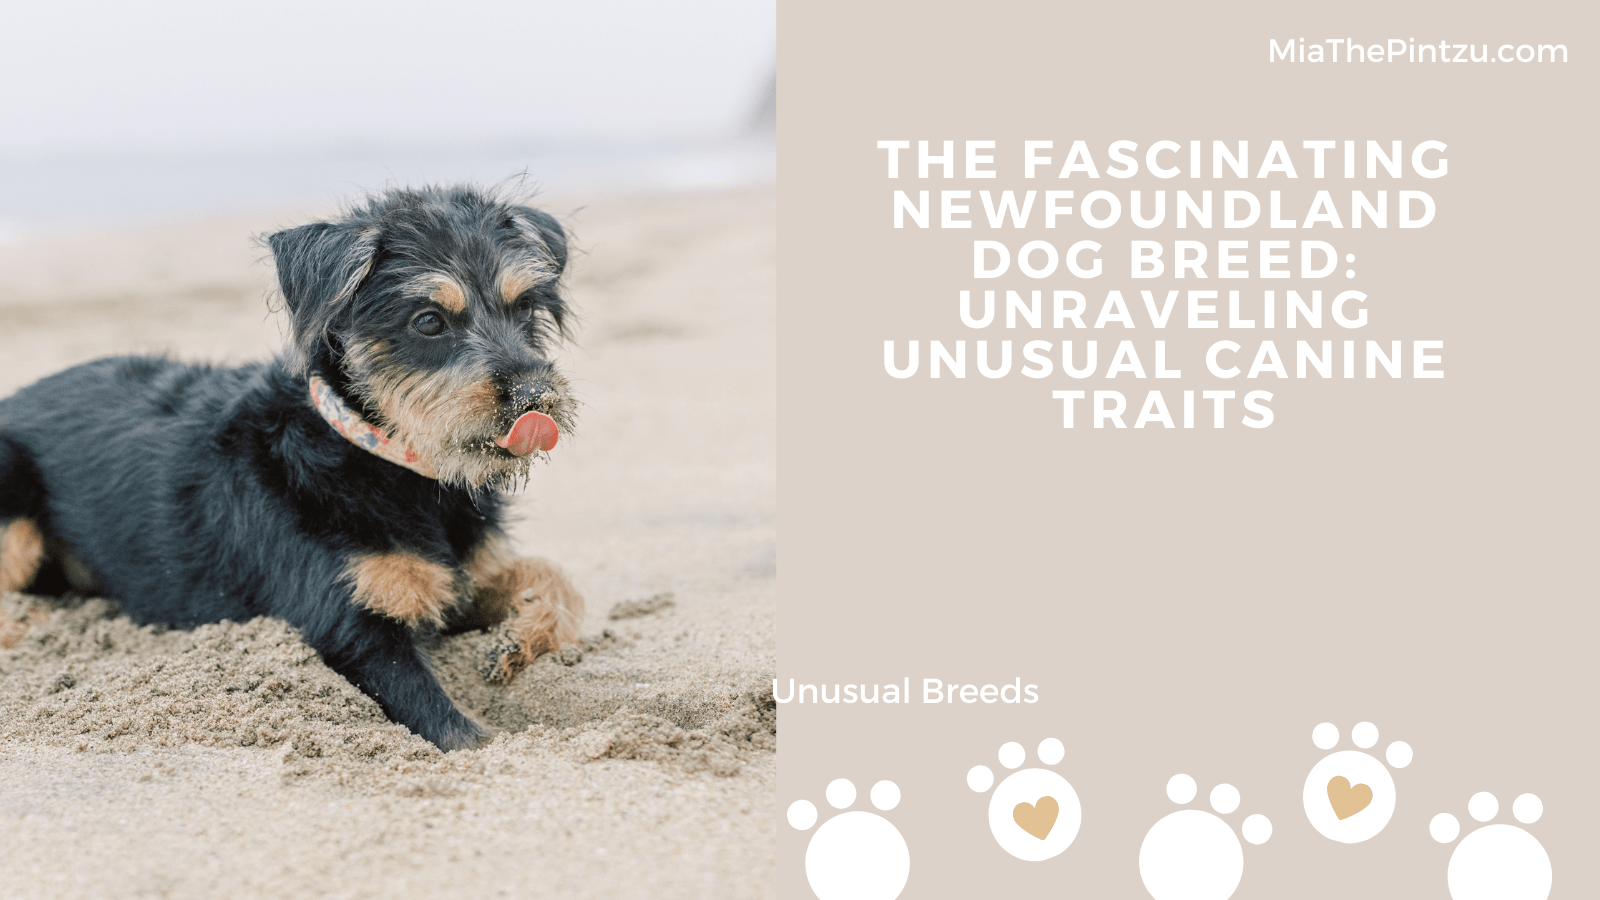 The Fascinating Newfoundland Dog Breed: Unraveling Unusual Canine Traits